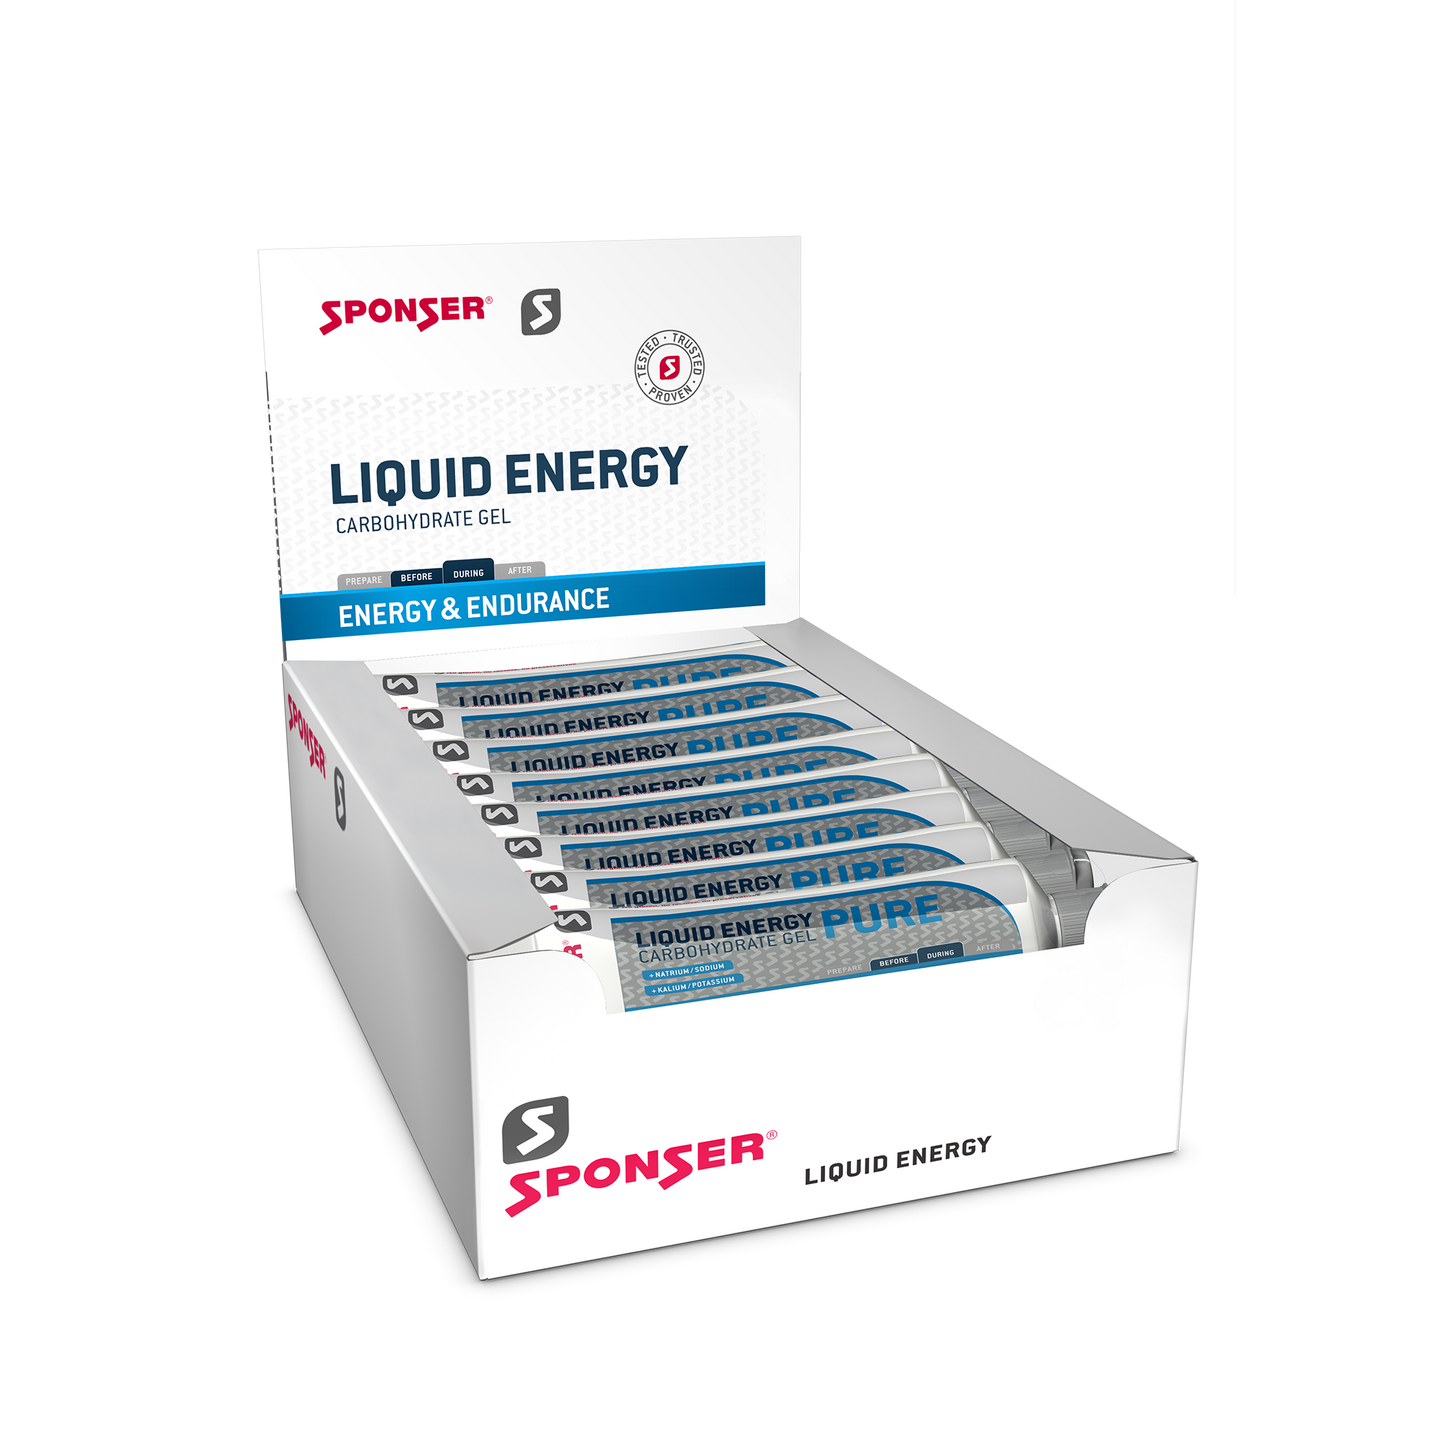 LIQUID ENERGY Gels